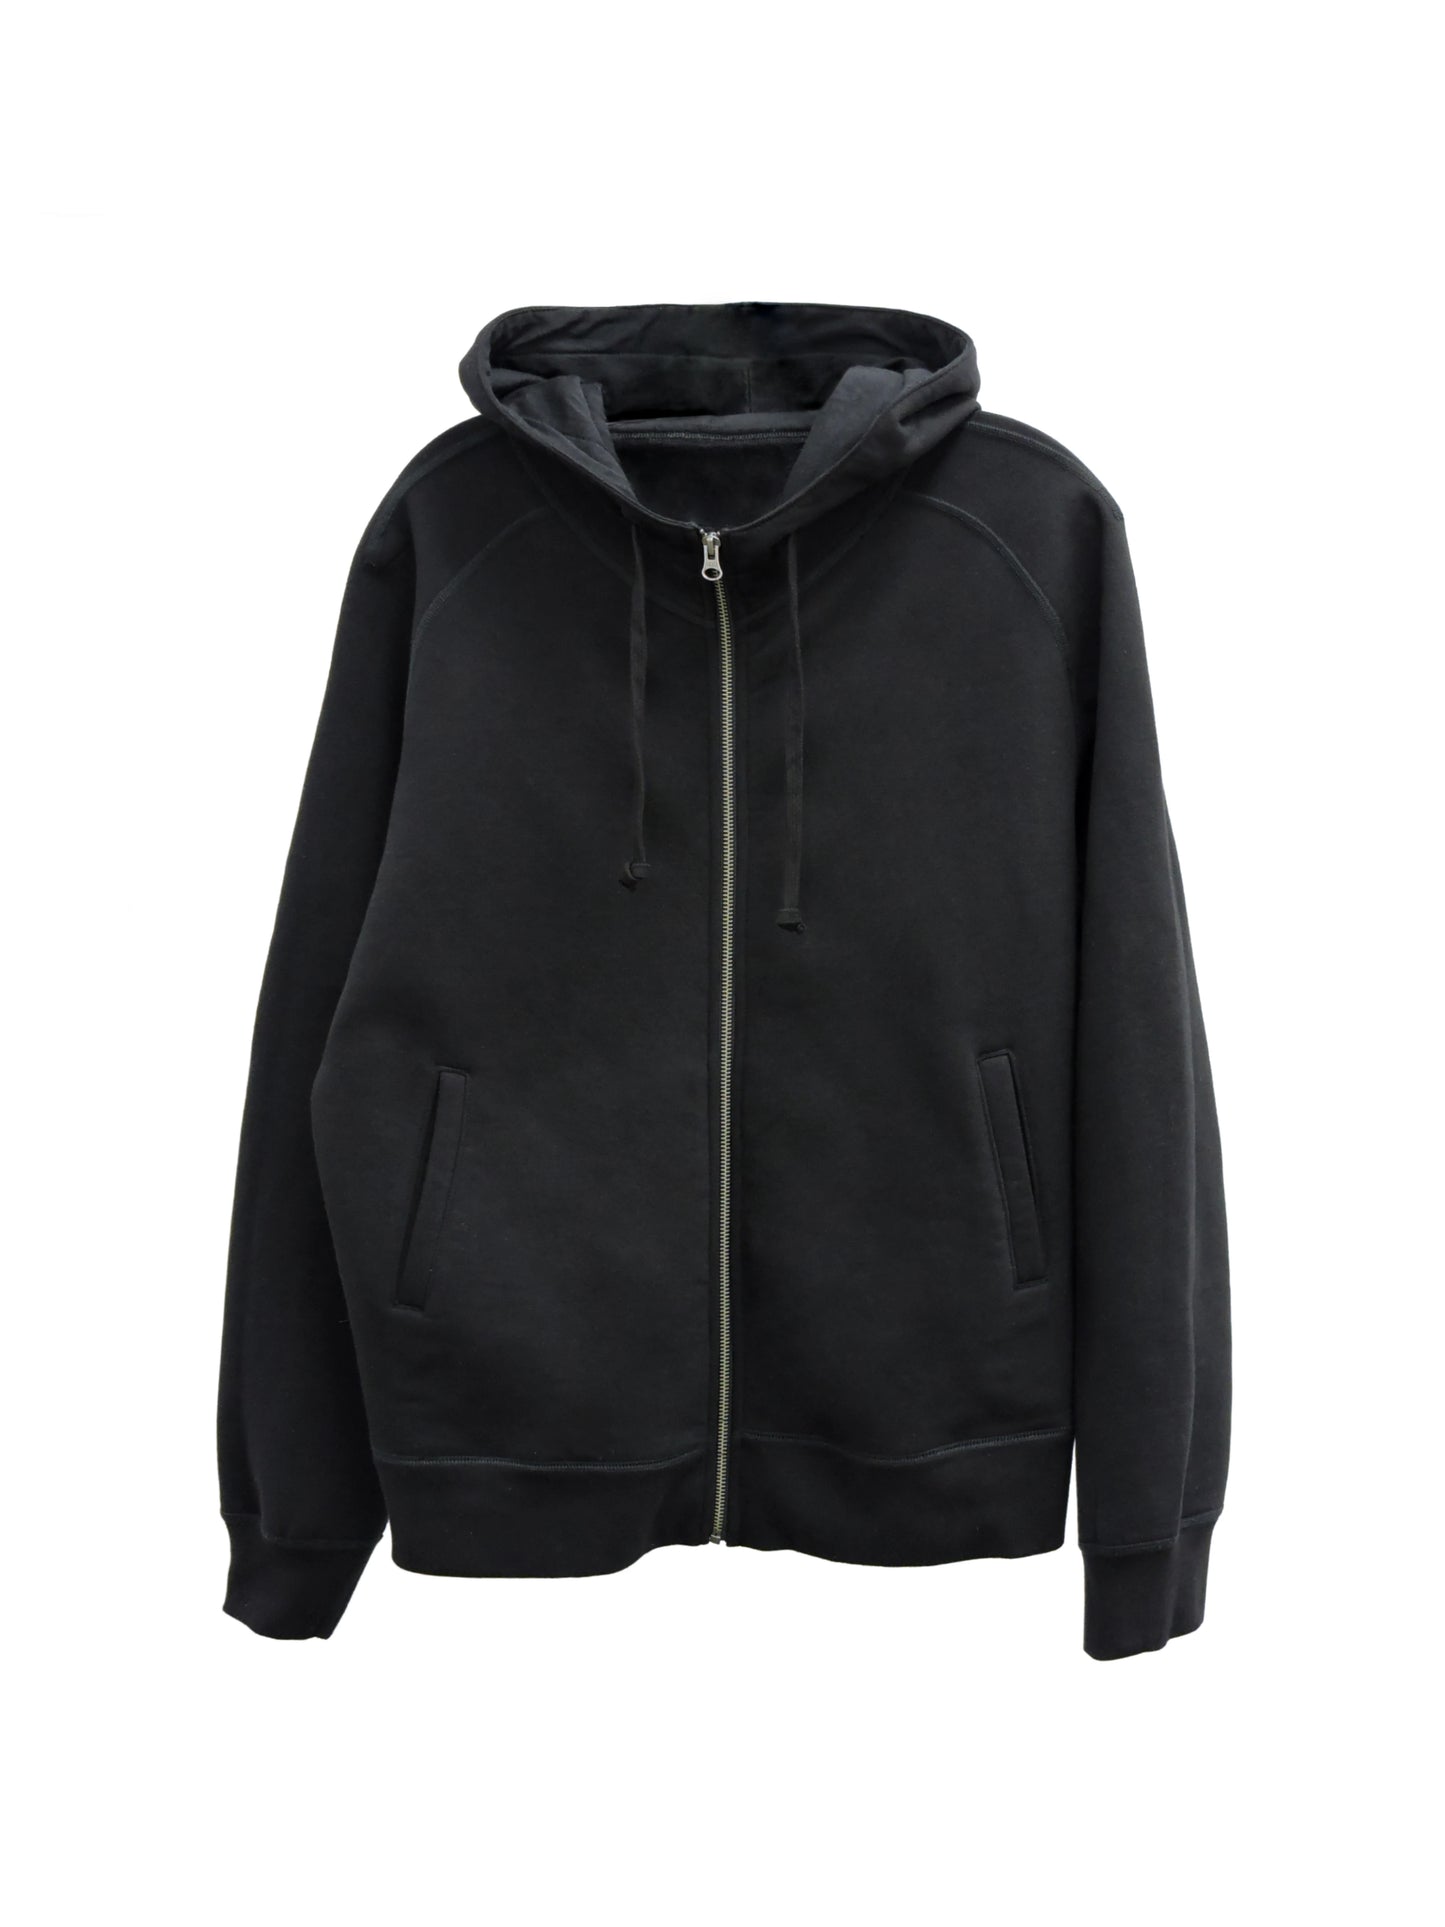 Black fleece sweater with wide hood and zipper